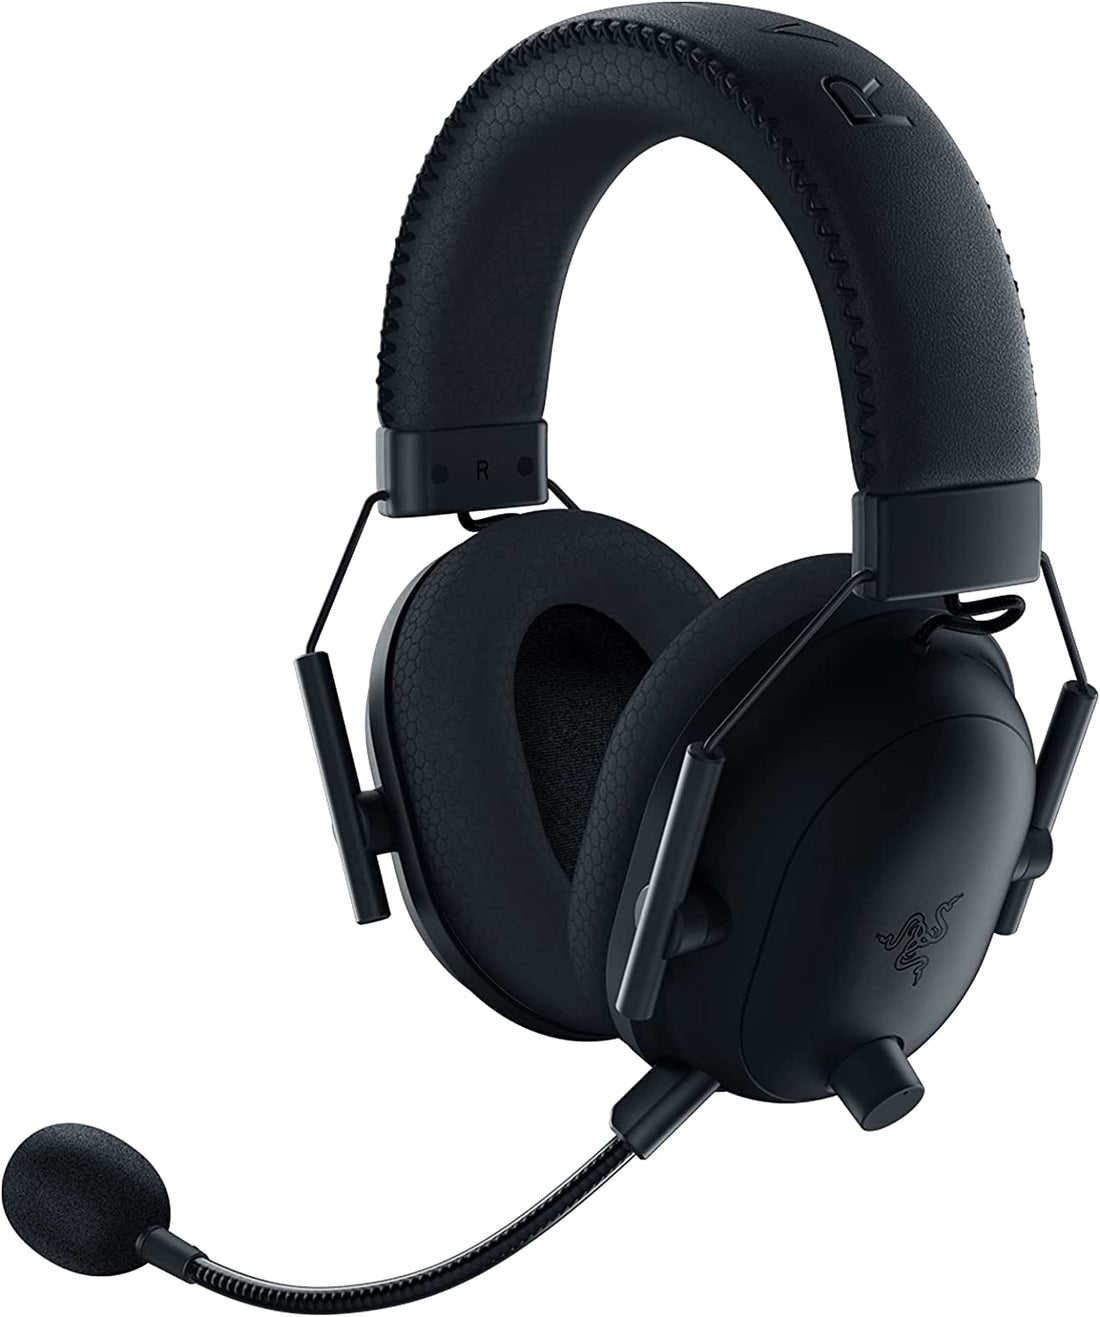 Razer BlackShark V2 Pro Wireless THX Spatial Audio Gaming Headset - Black (New)